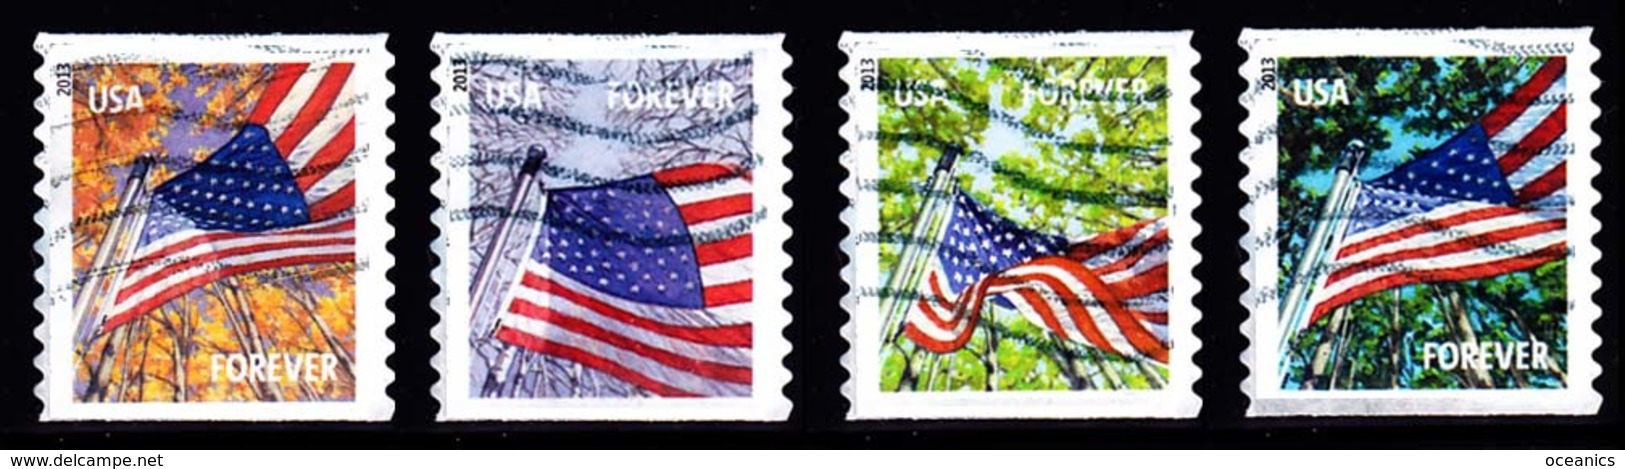 Etats-Unis / United States (Scott No.4774-77 - Flag) (o) - Oblitérés